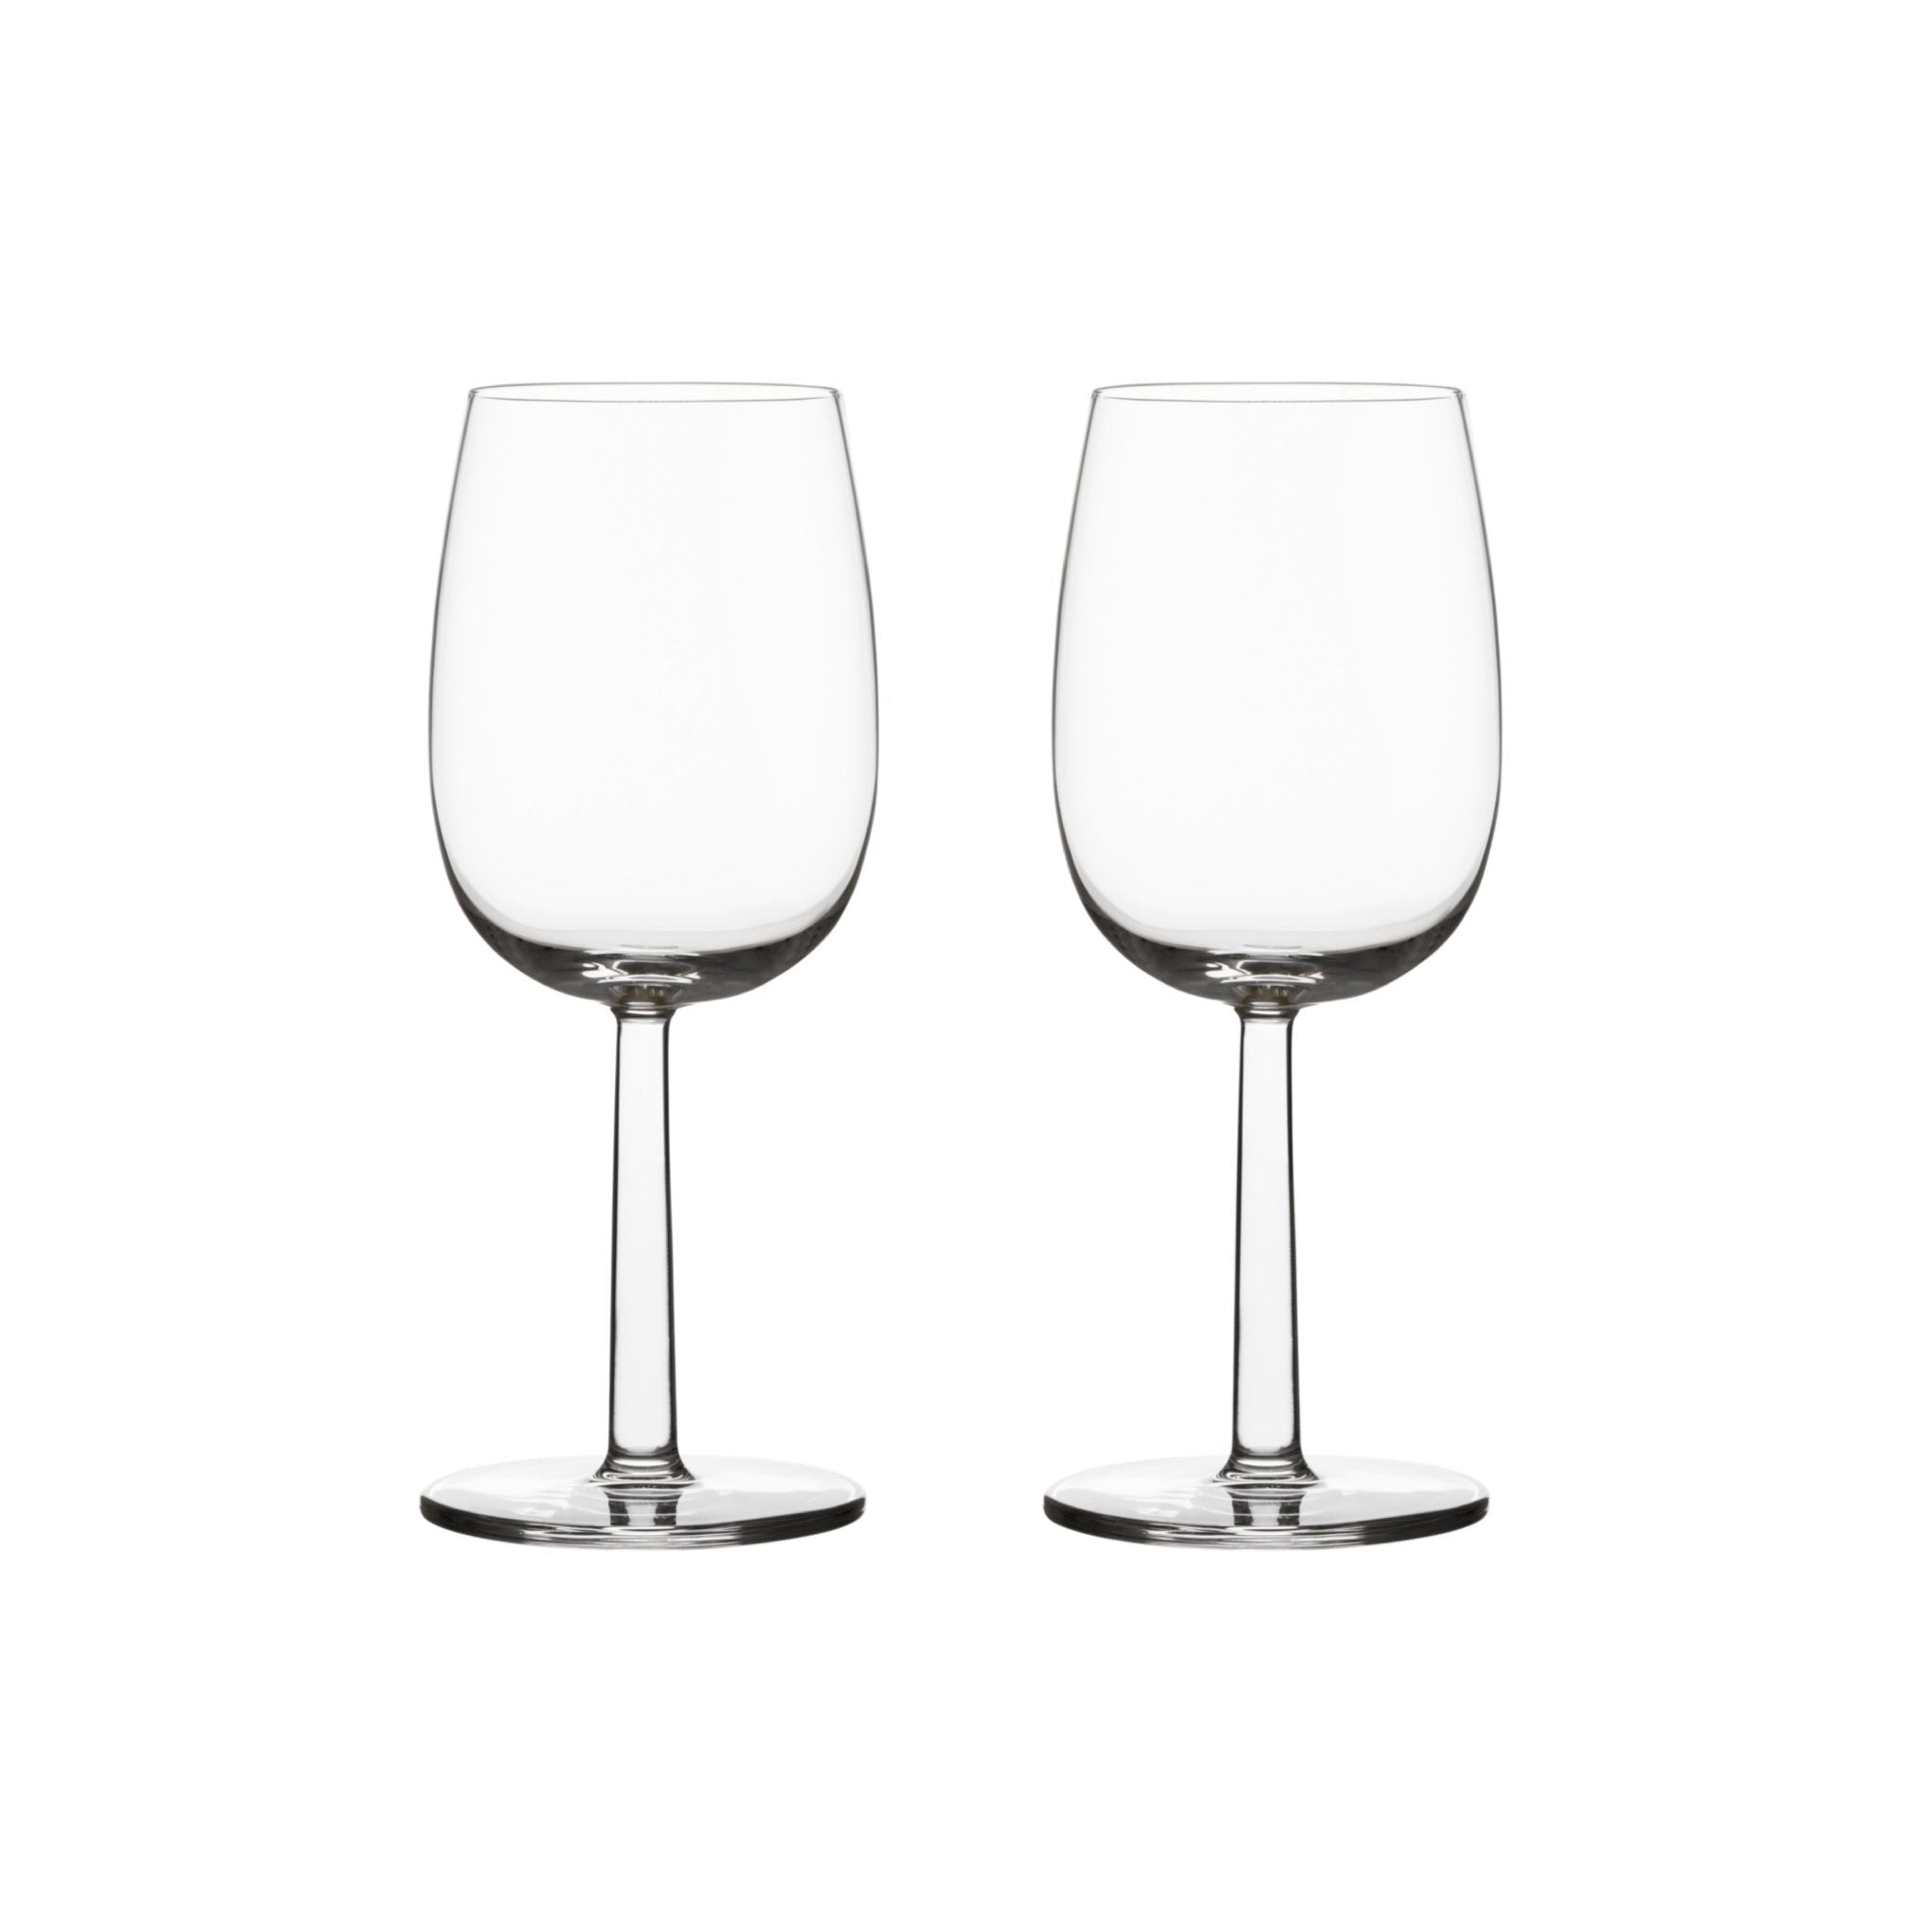 Raami White Wine Glass by Iittala